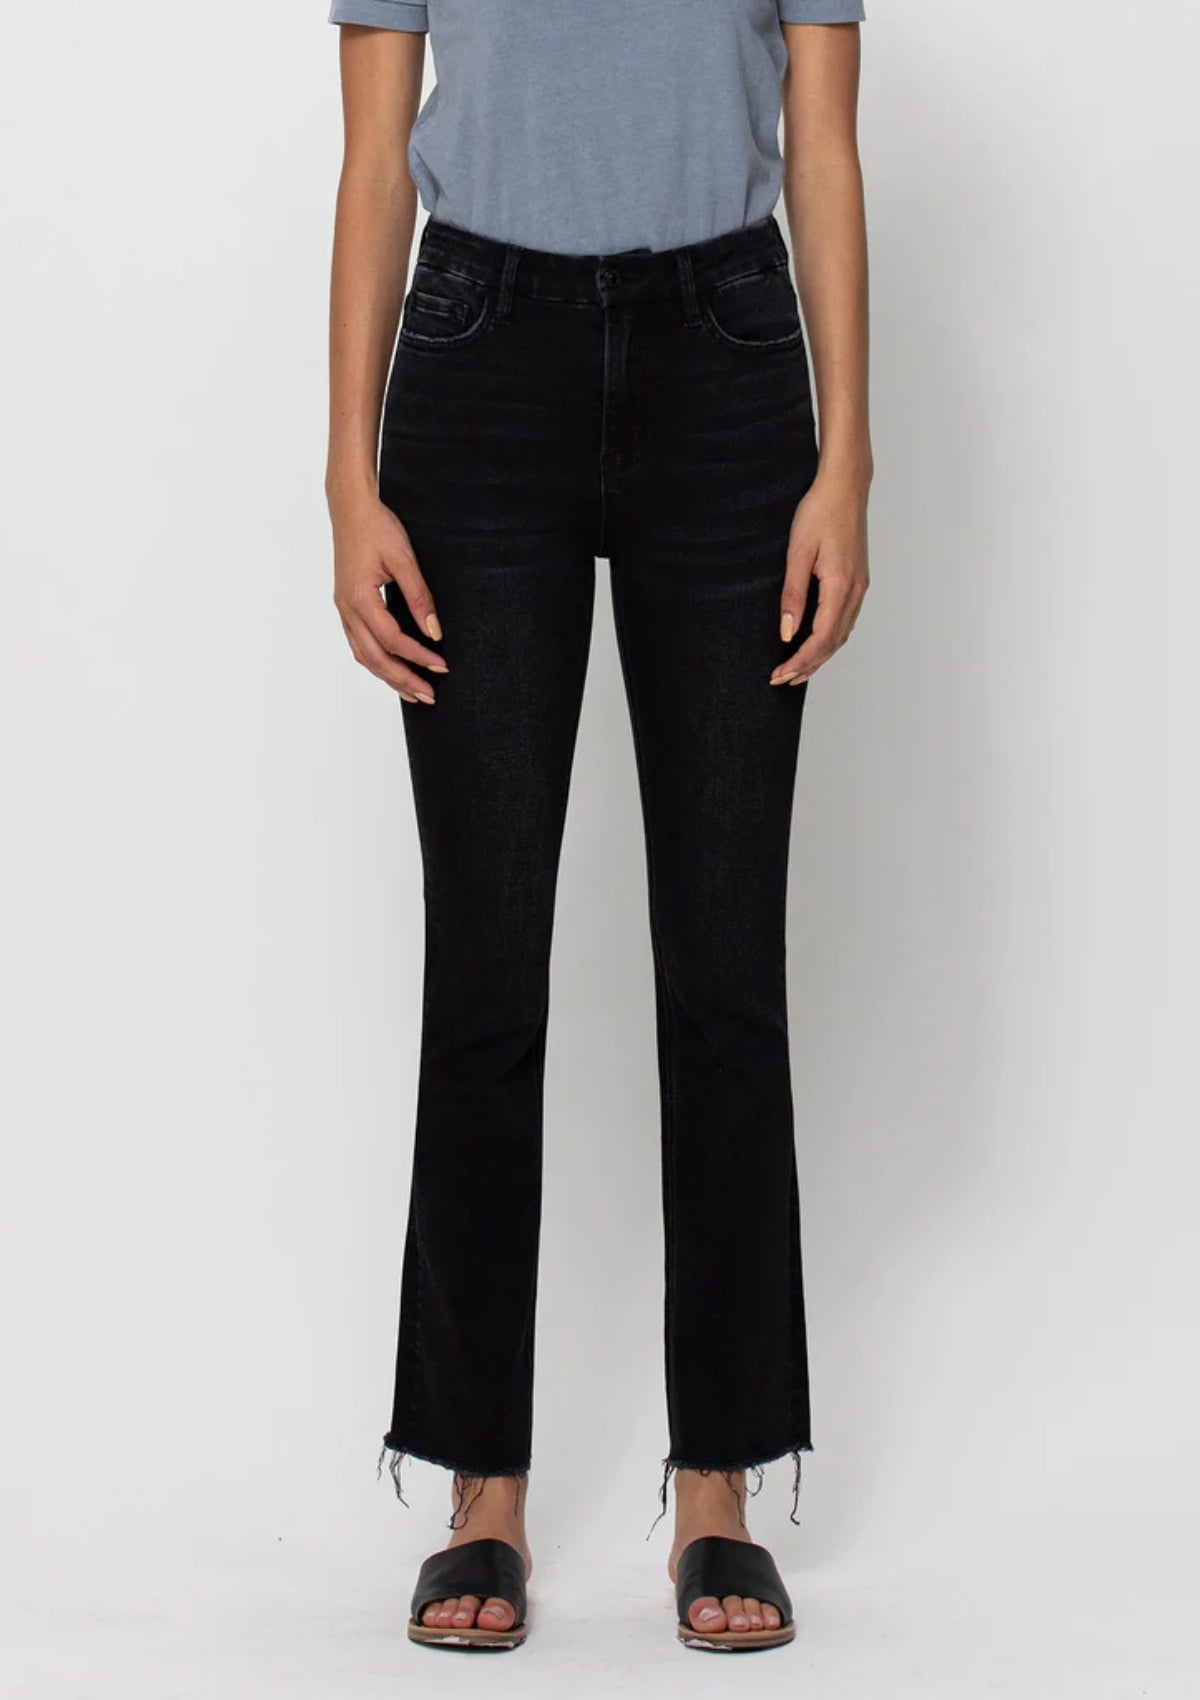 Black jeans with frayed ankle length hem.